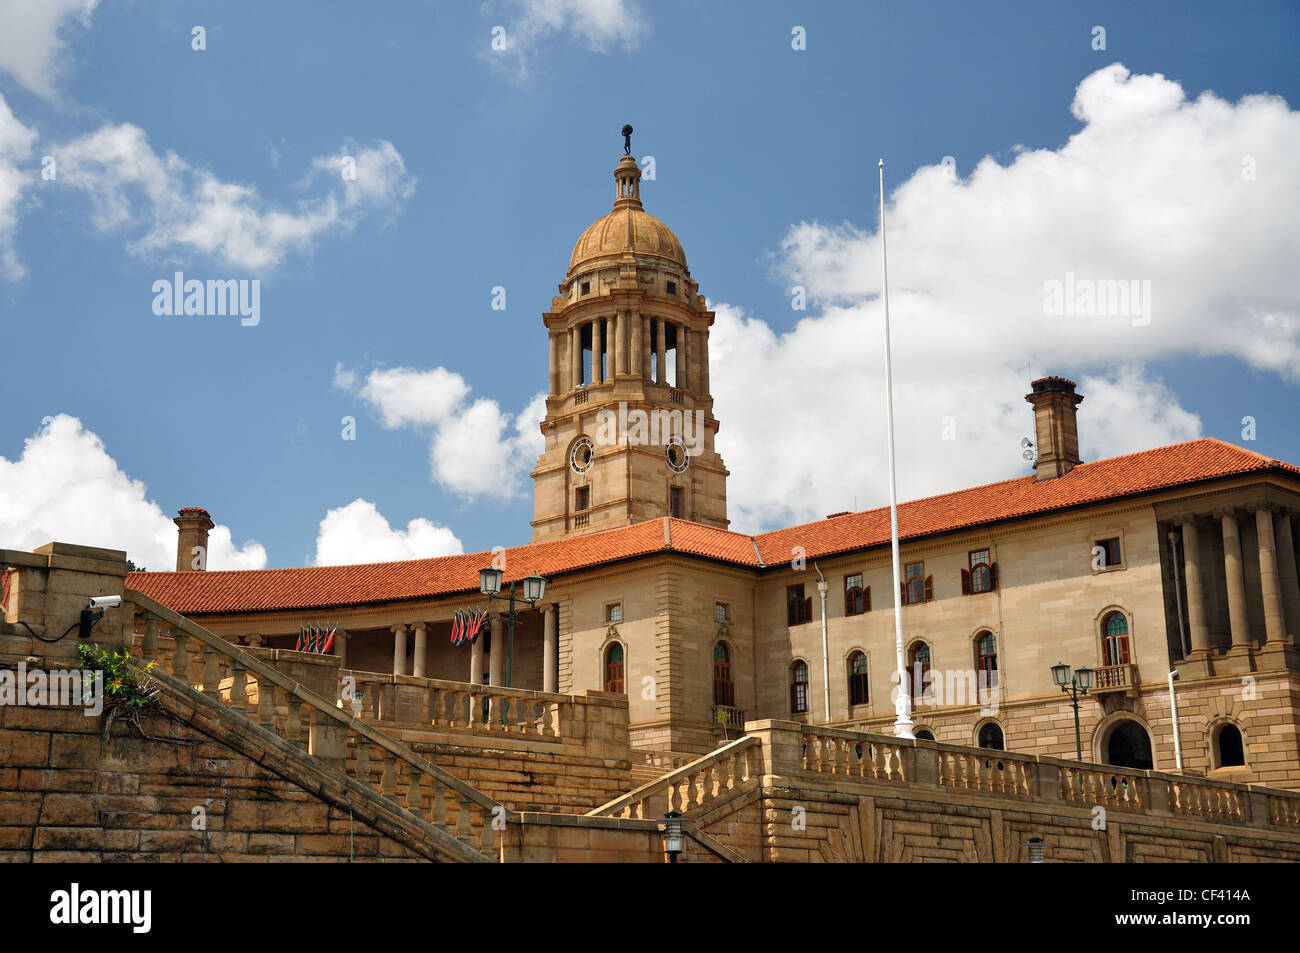 Die Union Buildings, Meintjieskop, Pretoria, Provinz Gauteng, Südafrika Stockfoto